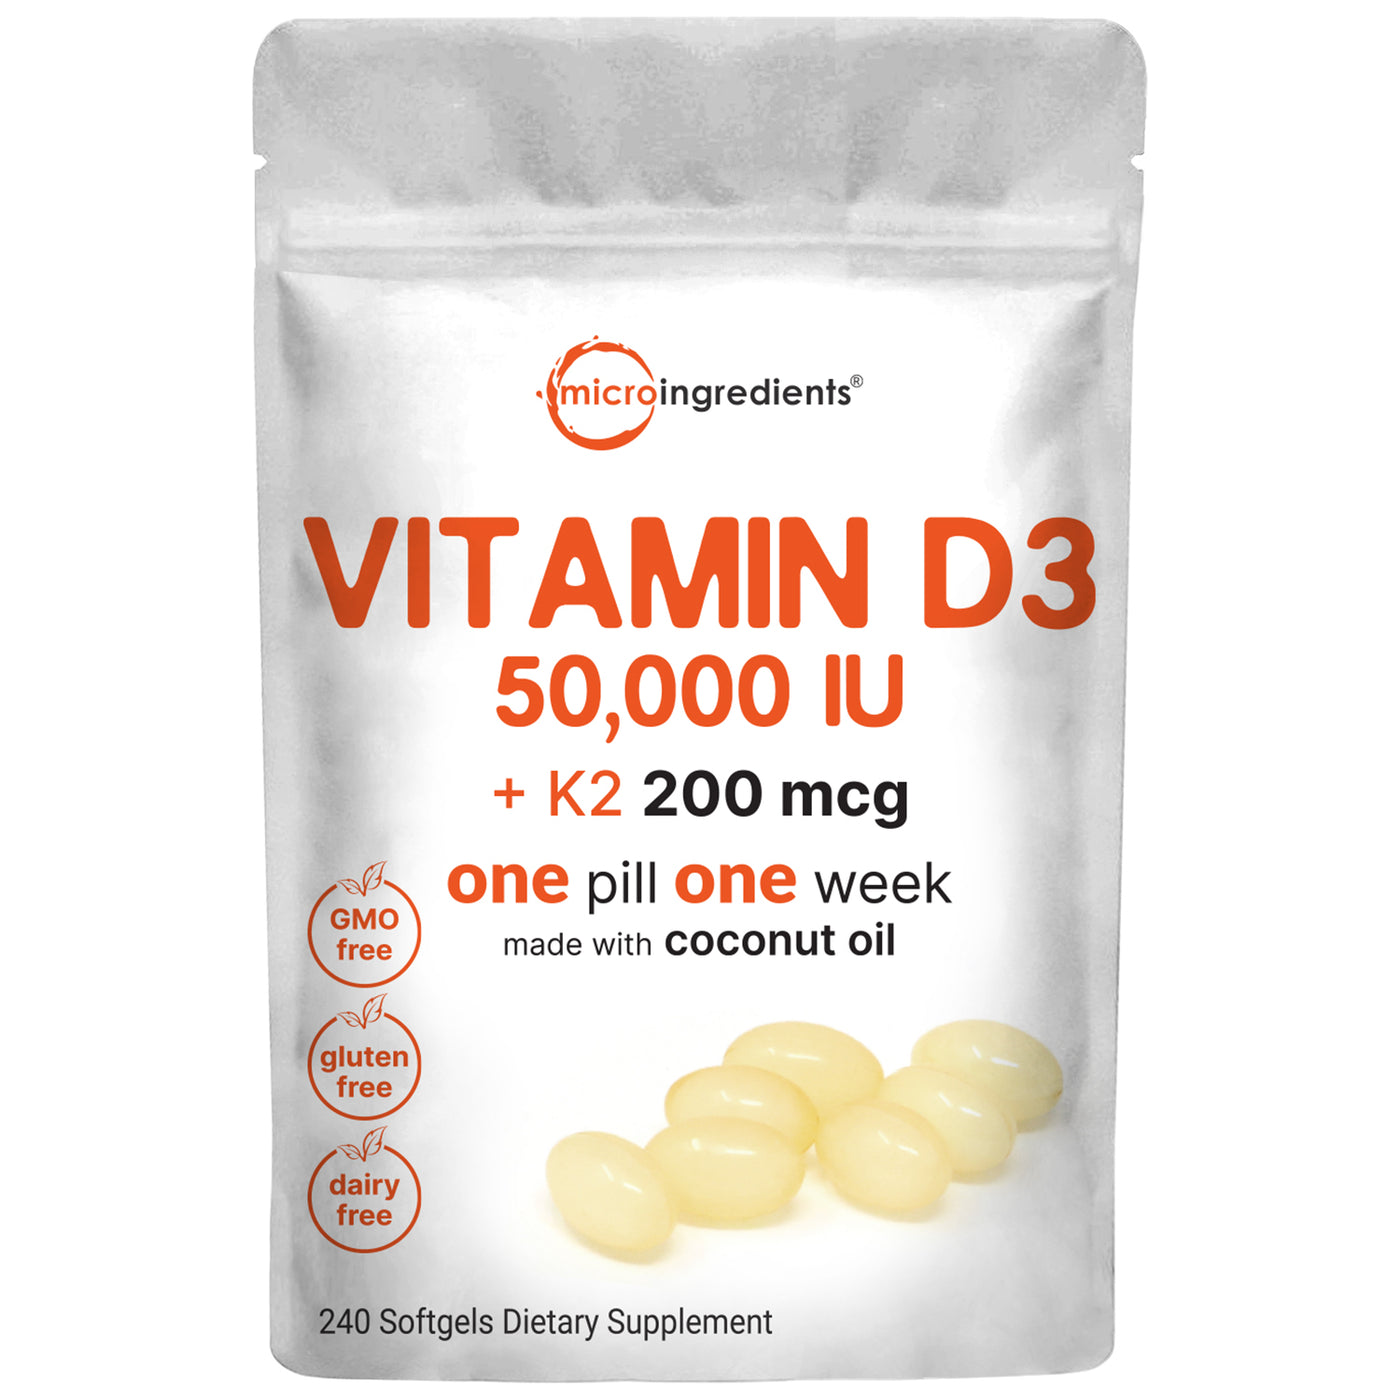 Vitamin D3 Plus K2 (MK-7)